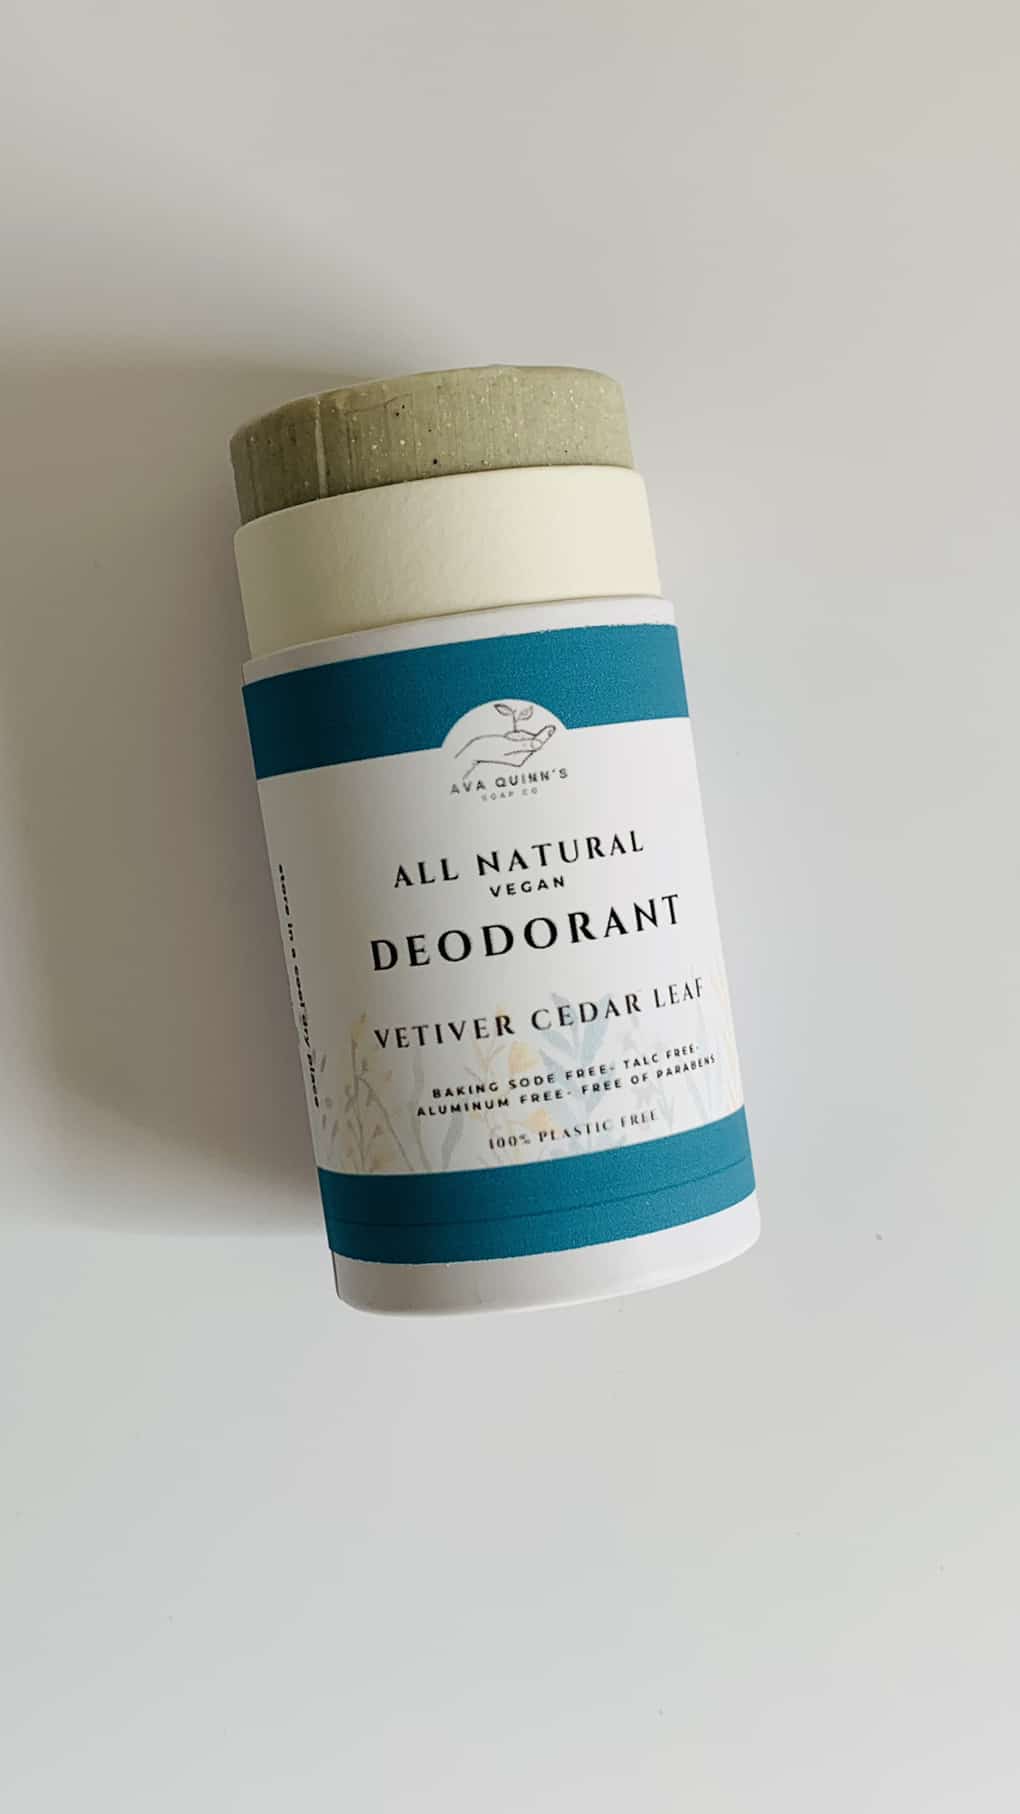 Vegan Deodorant by Ava Quinn's